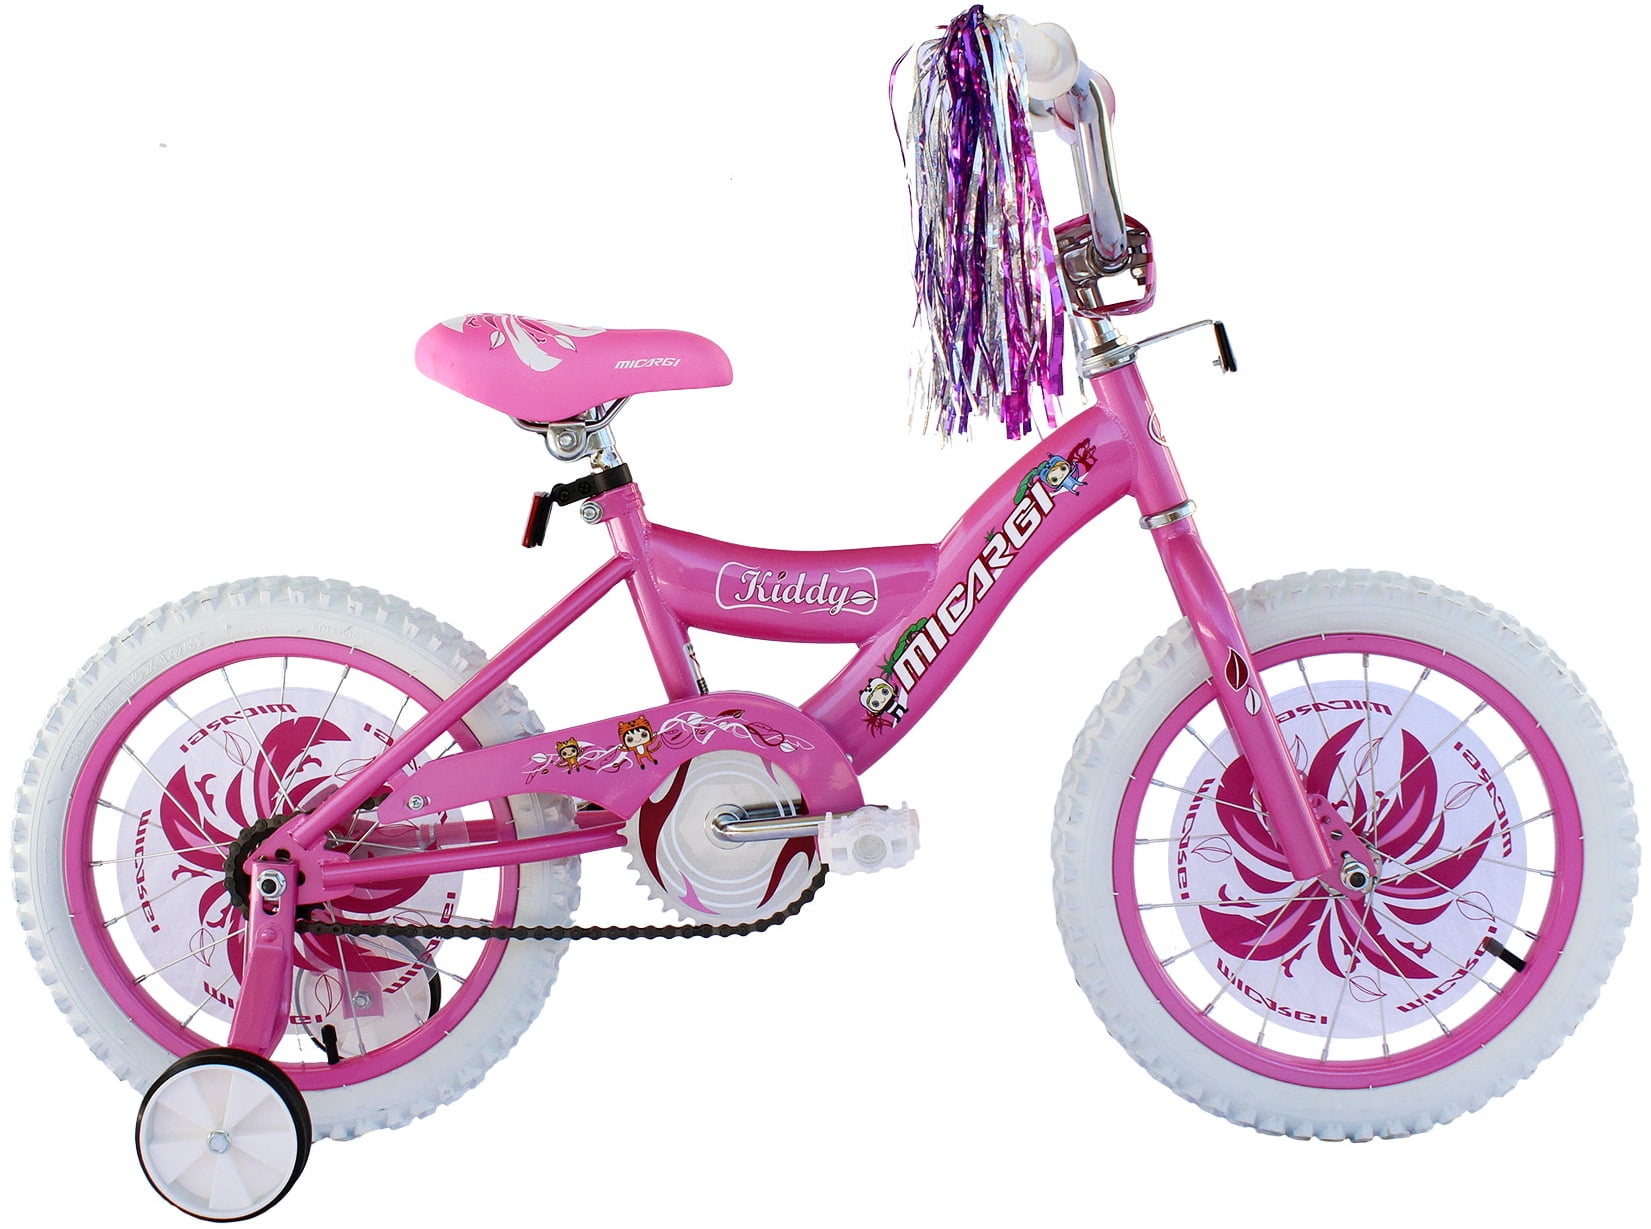 Micargi Bicycles 12 in Bicycle in Pink Finish